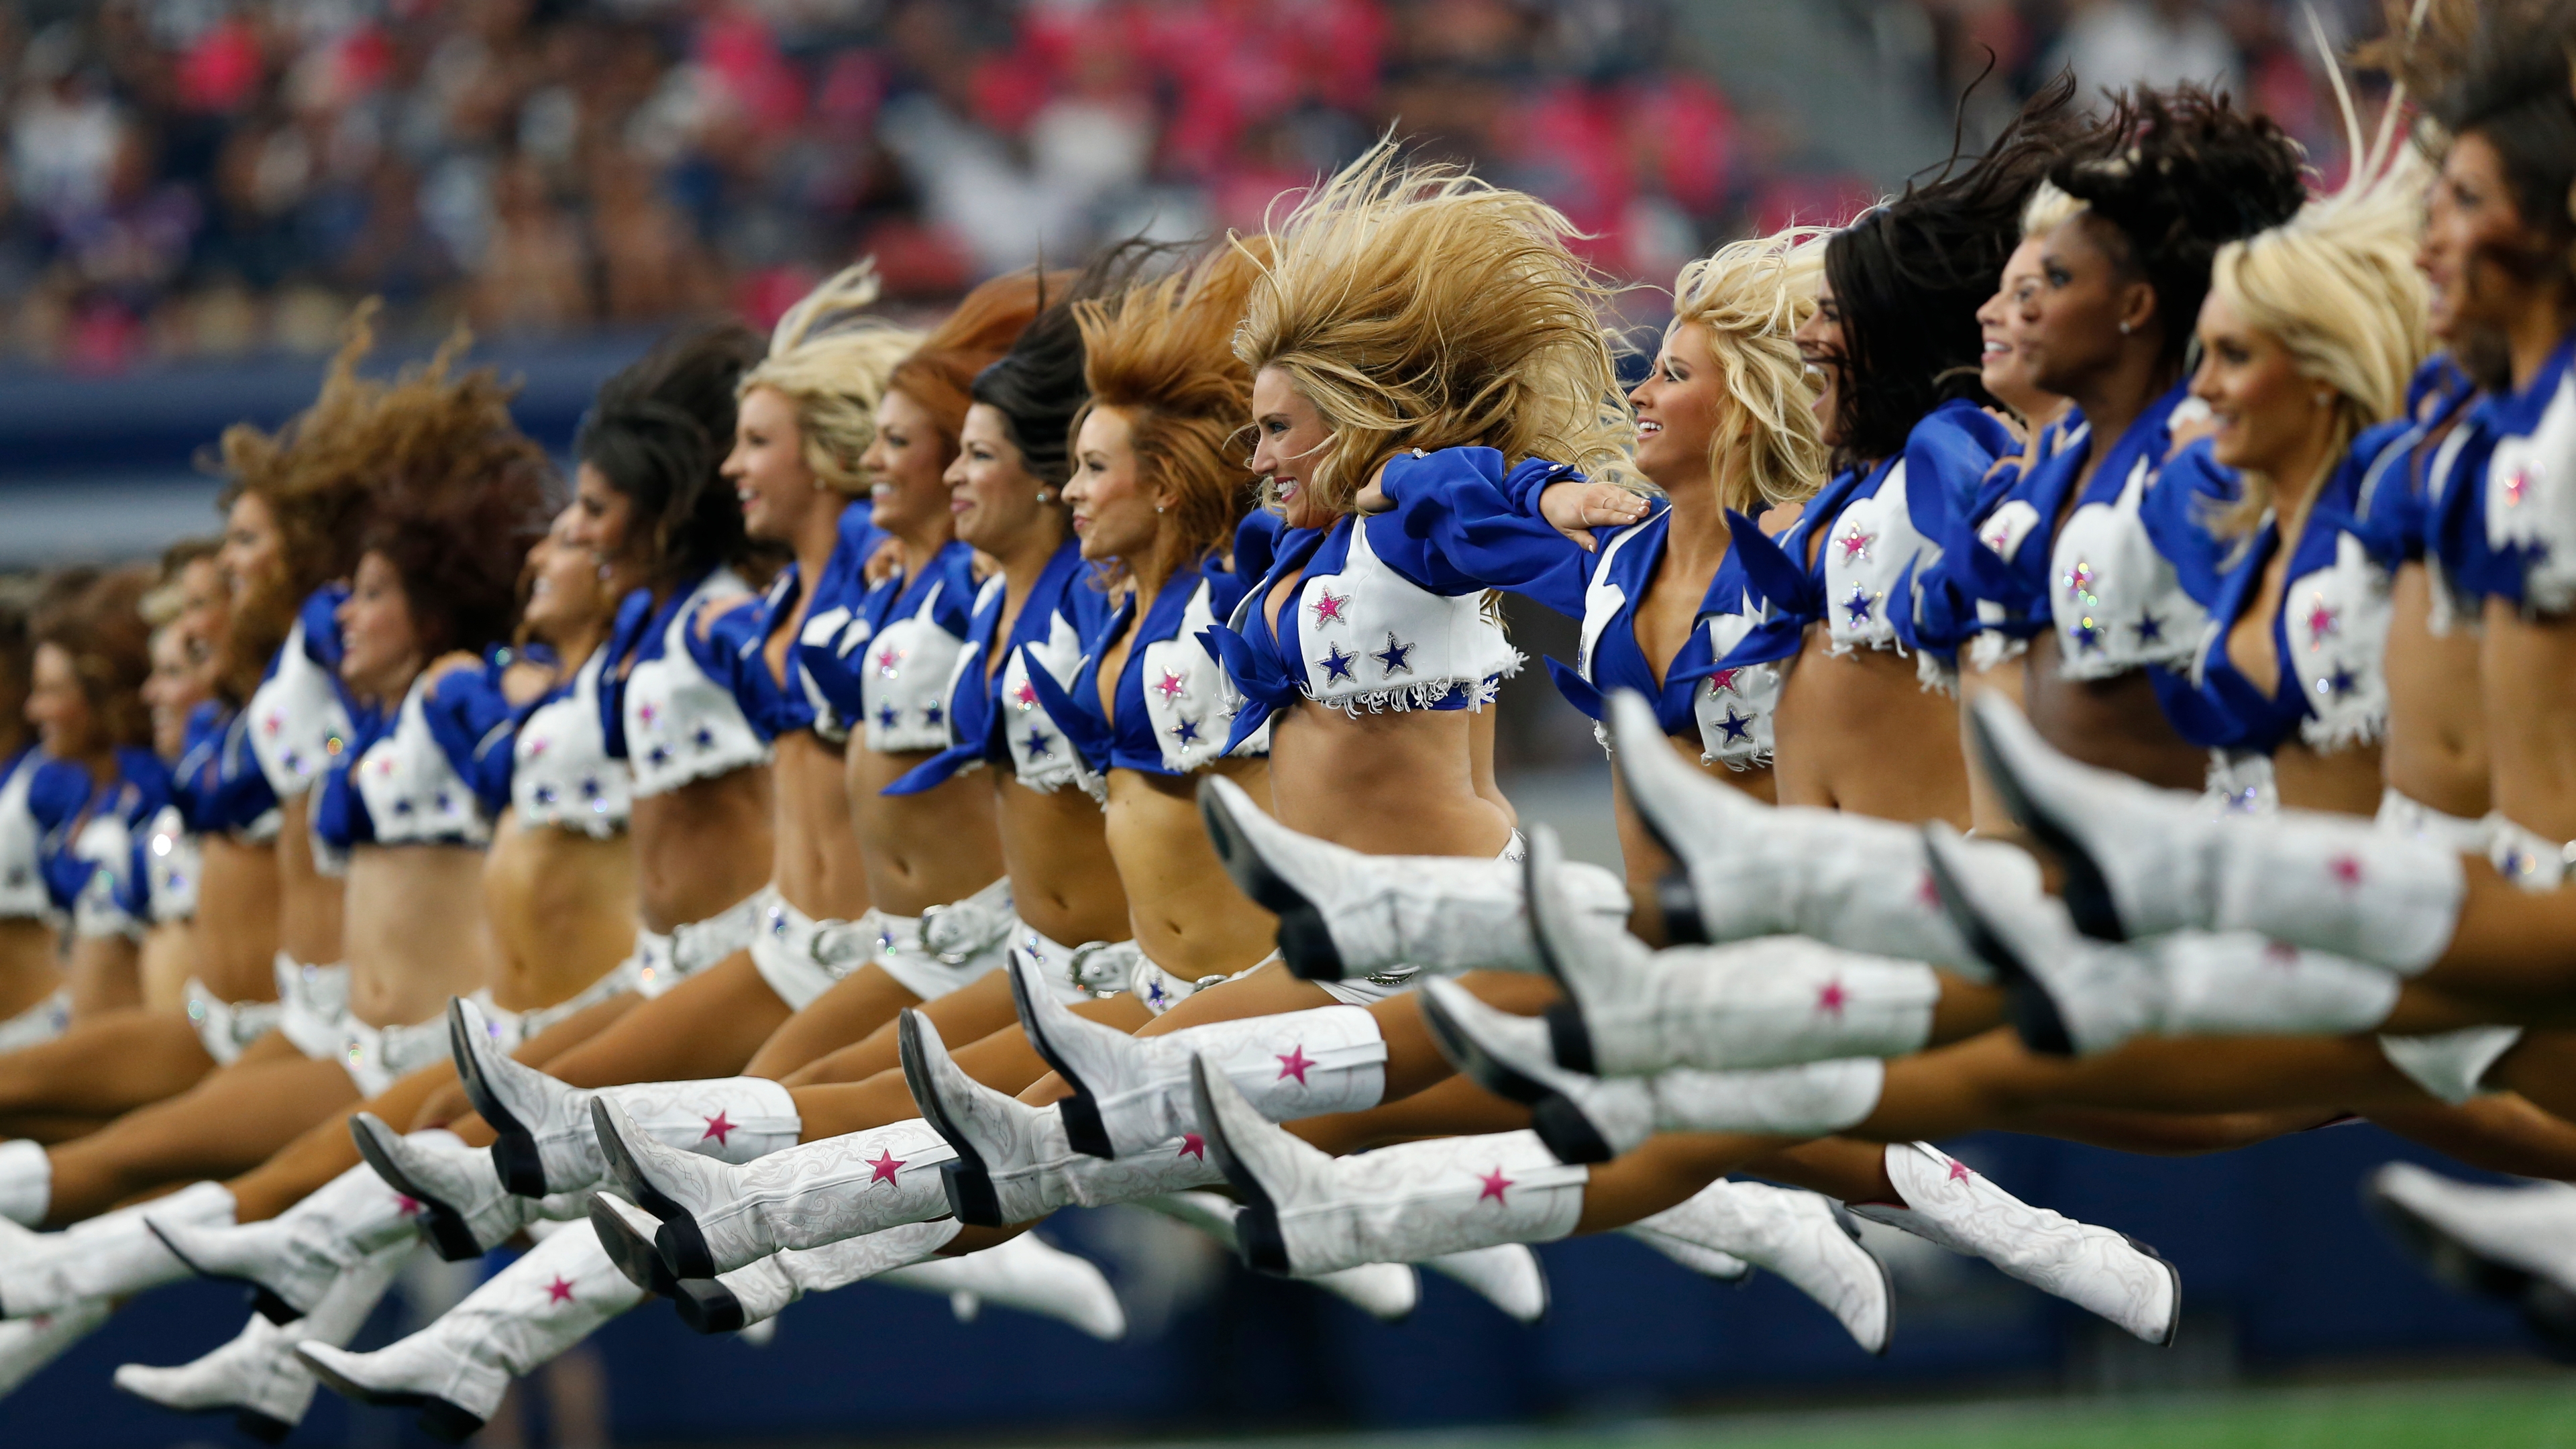 Cheerleaders Dallas Cowboys NFL Bare Midriff Blonde Brunette Long Hair Boots Uniform 4K Group Of Wom 3840x2160